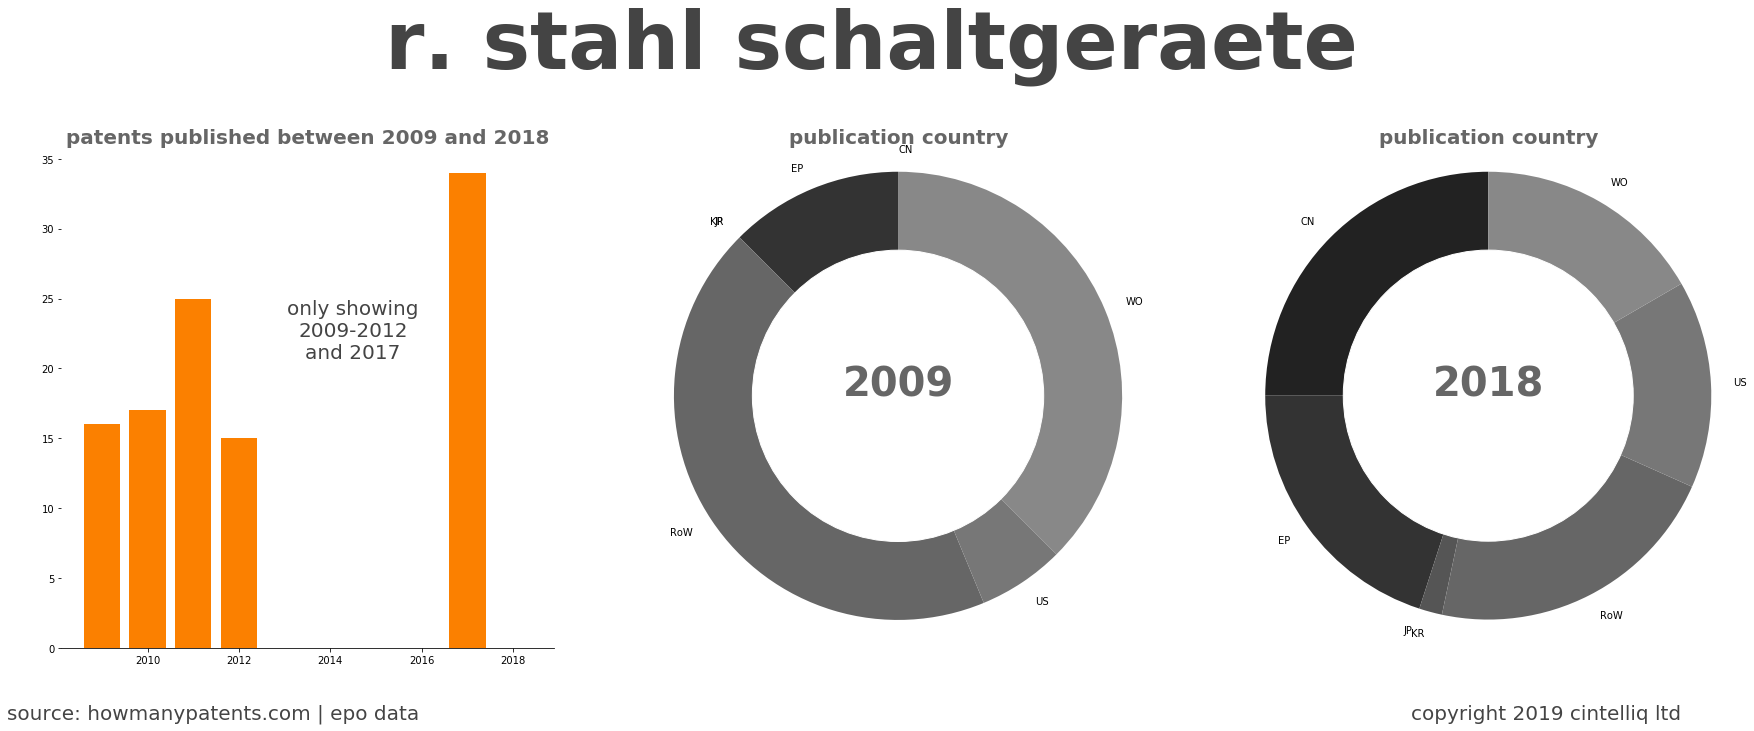 summary of patents for R. Stahl Schaltgeraete